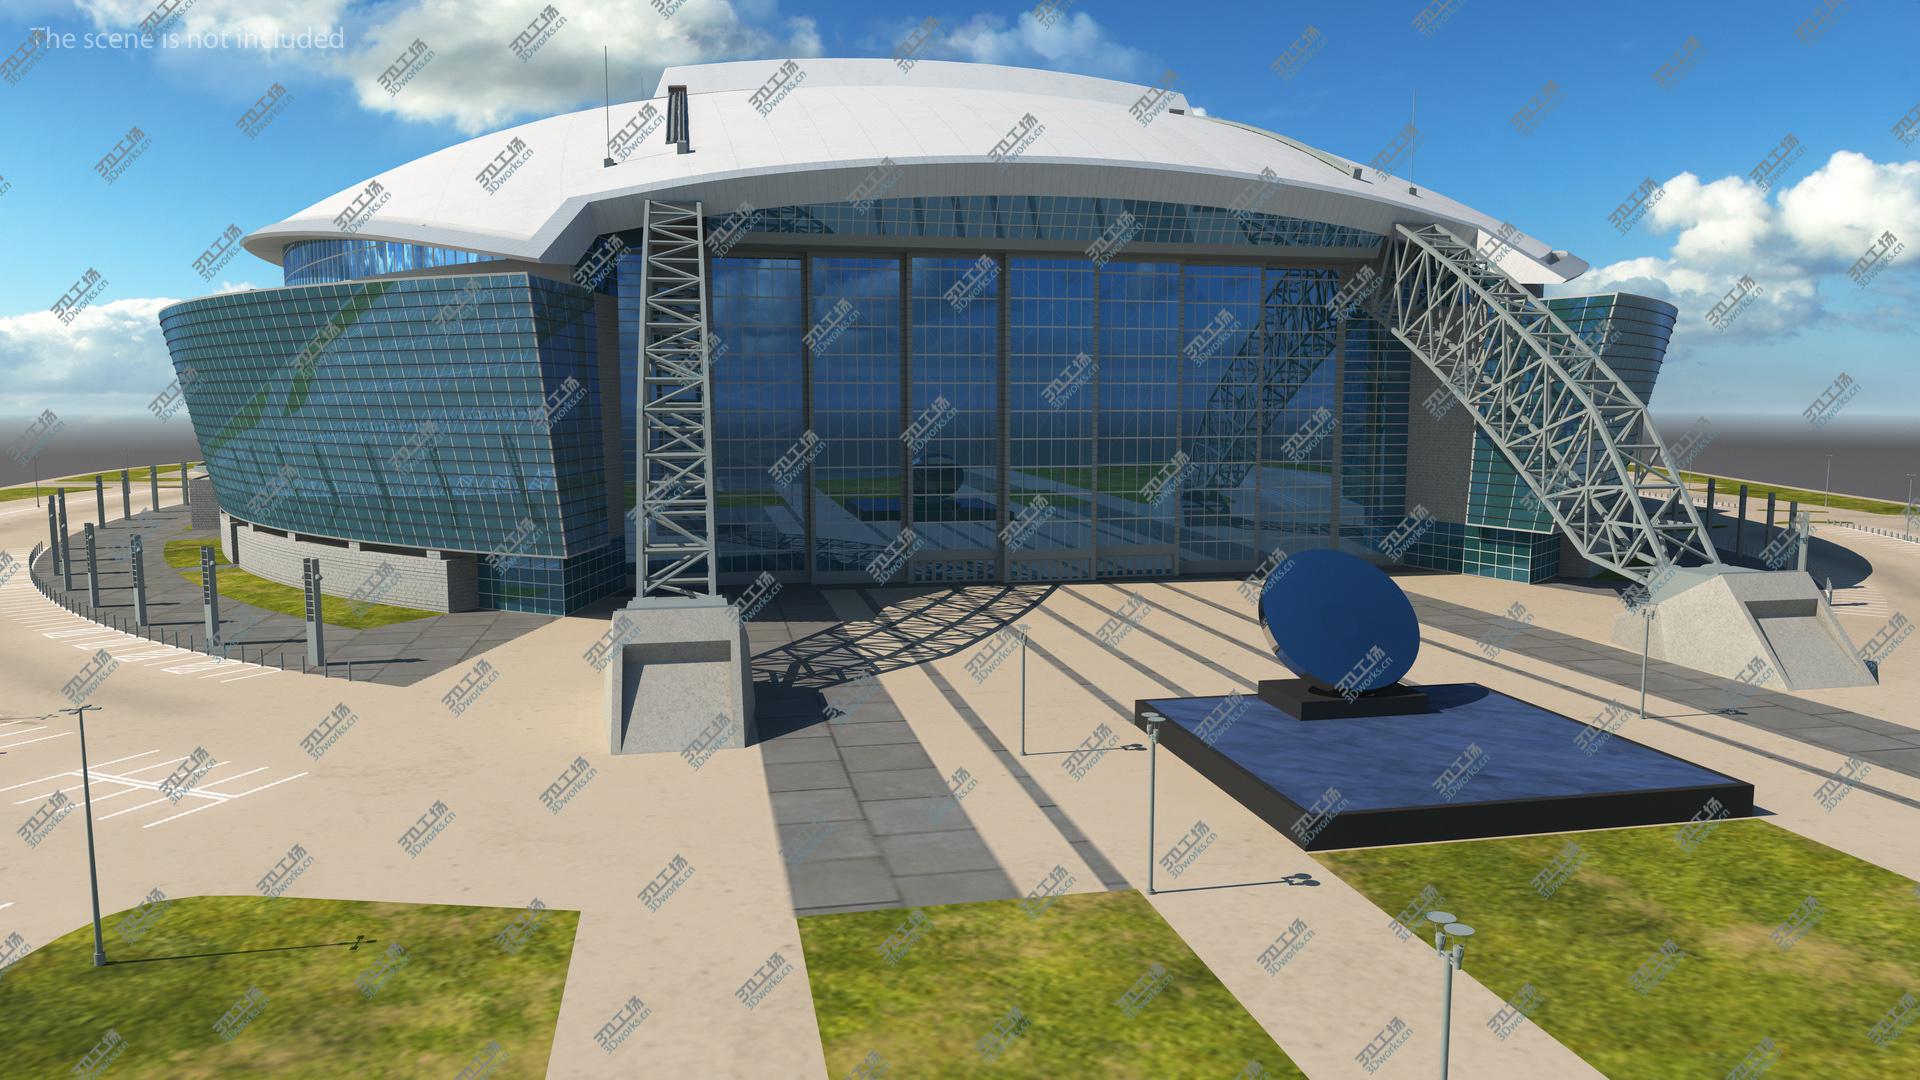 images/goods_img/20210319/3D Stadium Building/5.jpg